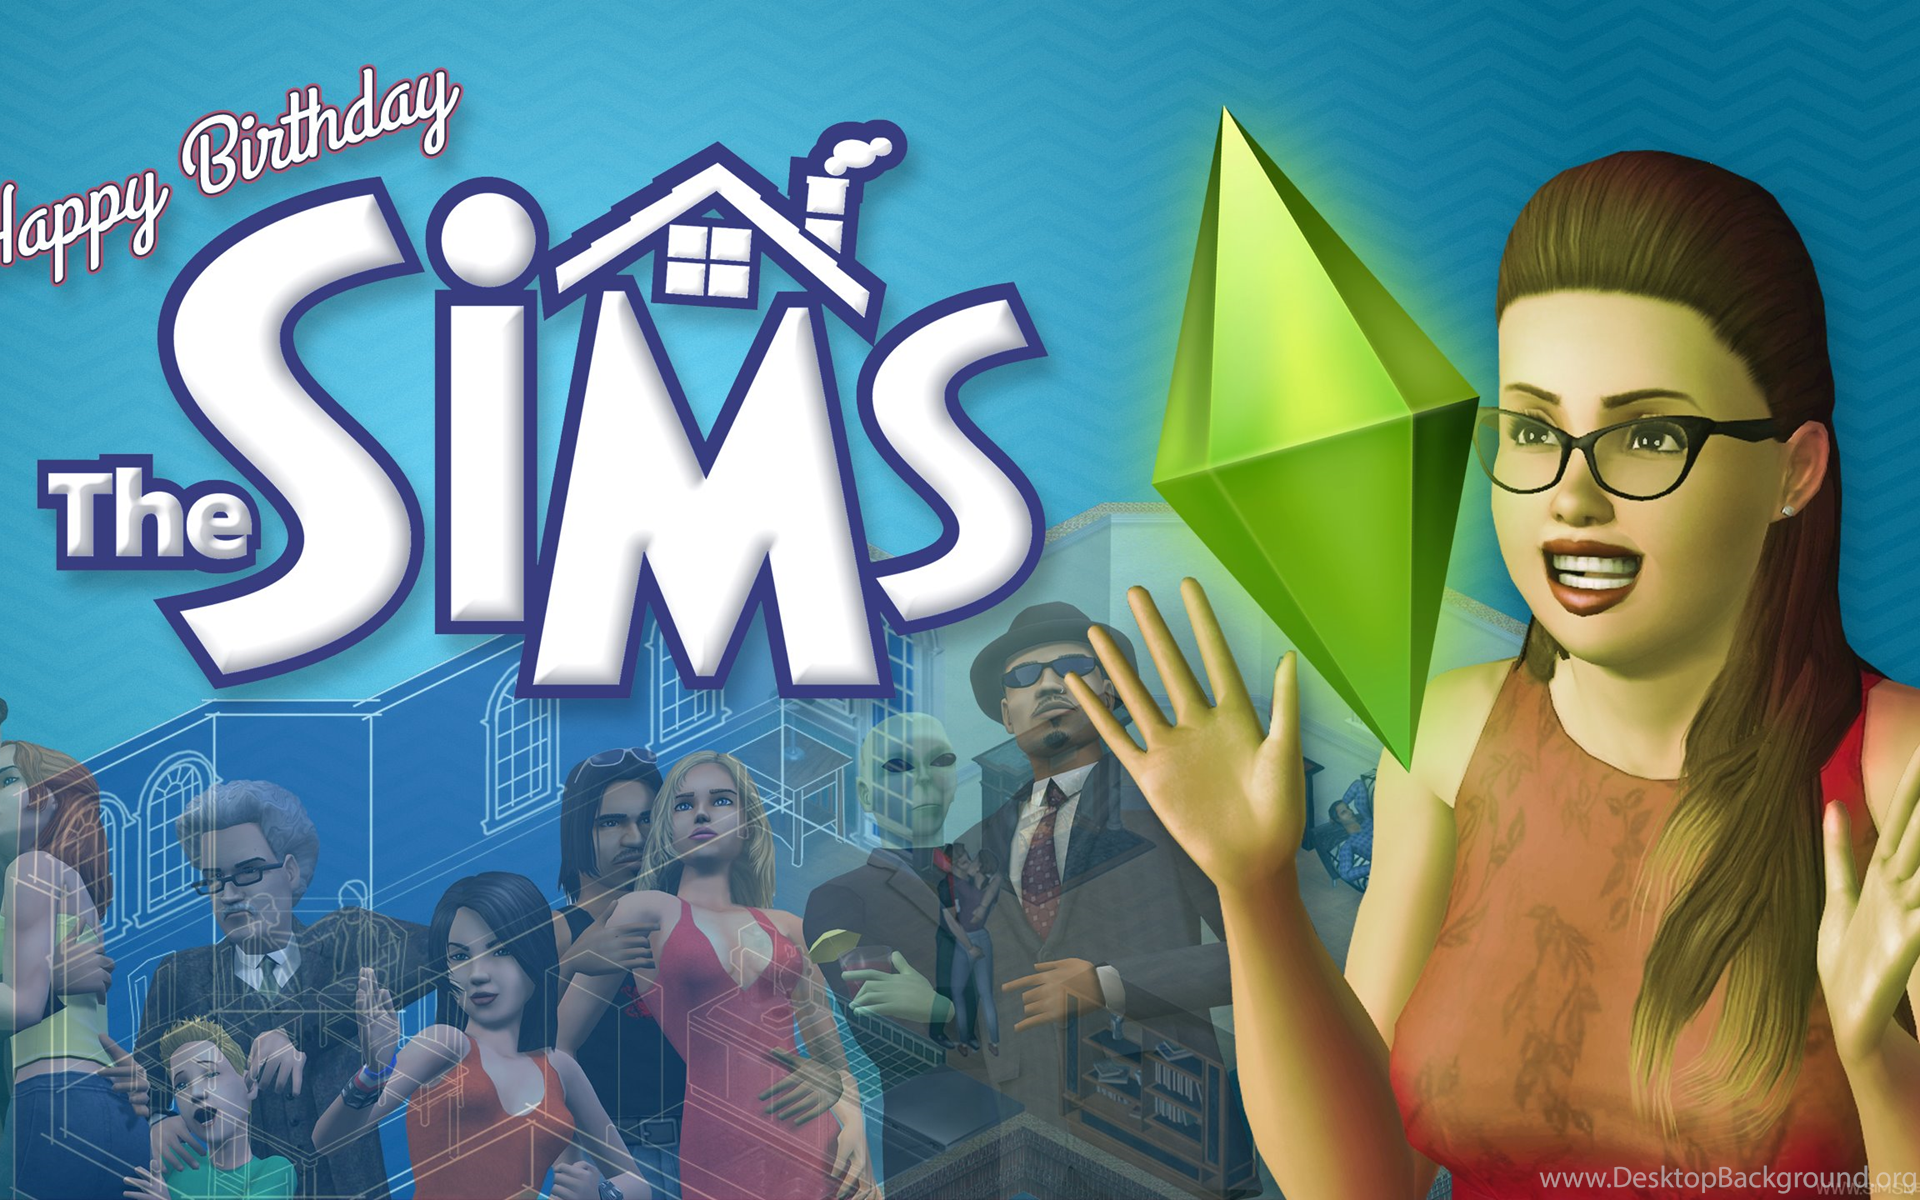 Sims google play. Игра SIMS 1. The SIMS 1 обложка. SIMS 4 обложка. SIMS 4 обложка игры.